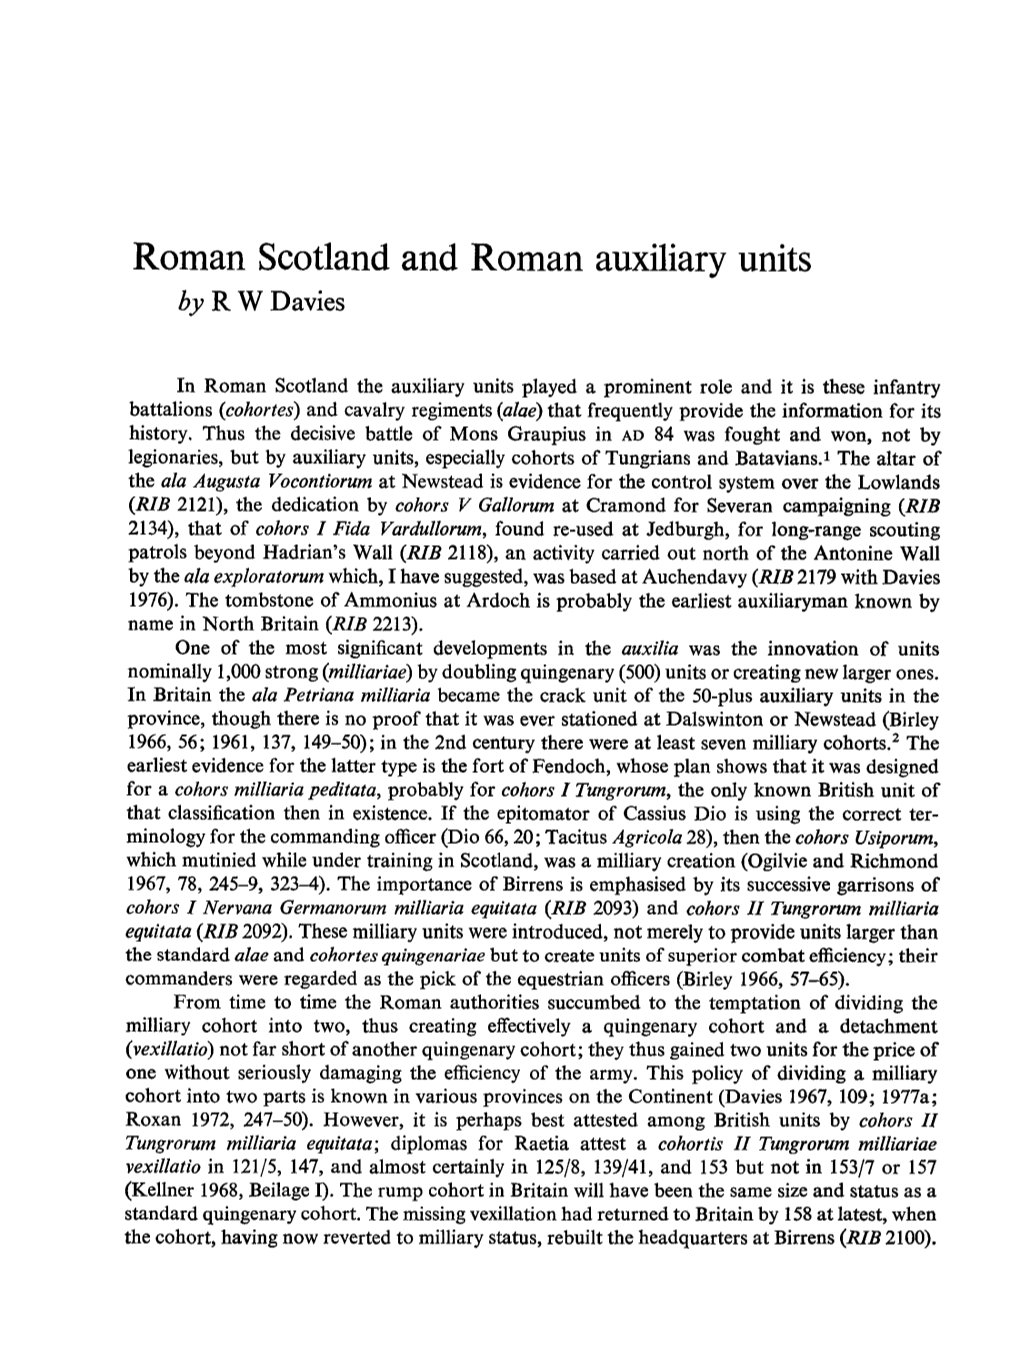 Roman Scotland and Roman Auxiliary Units by Davierw S